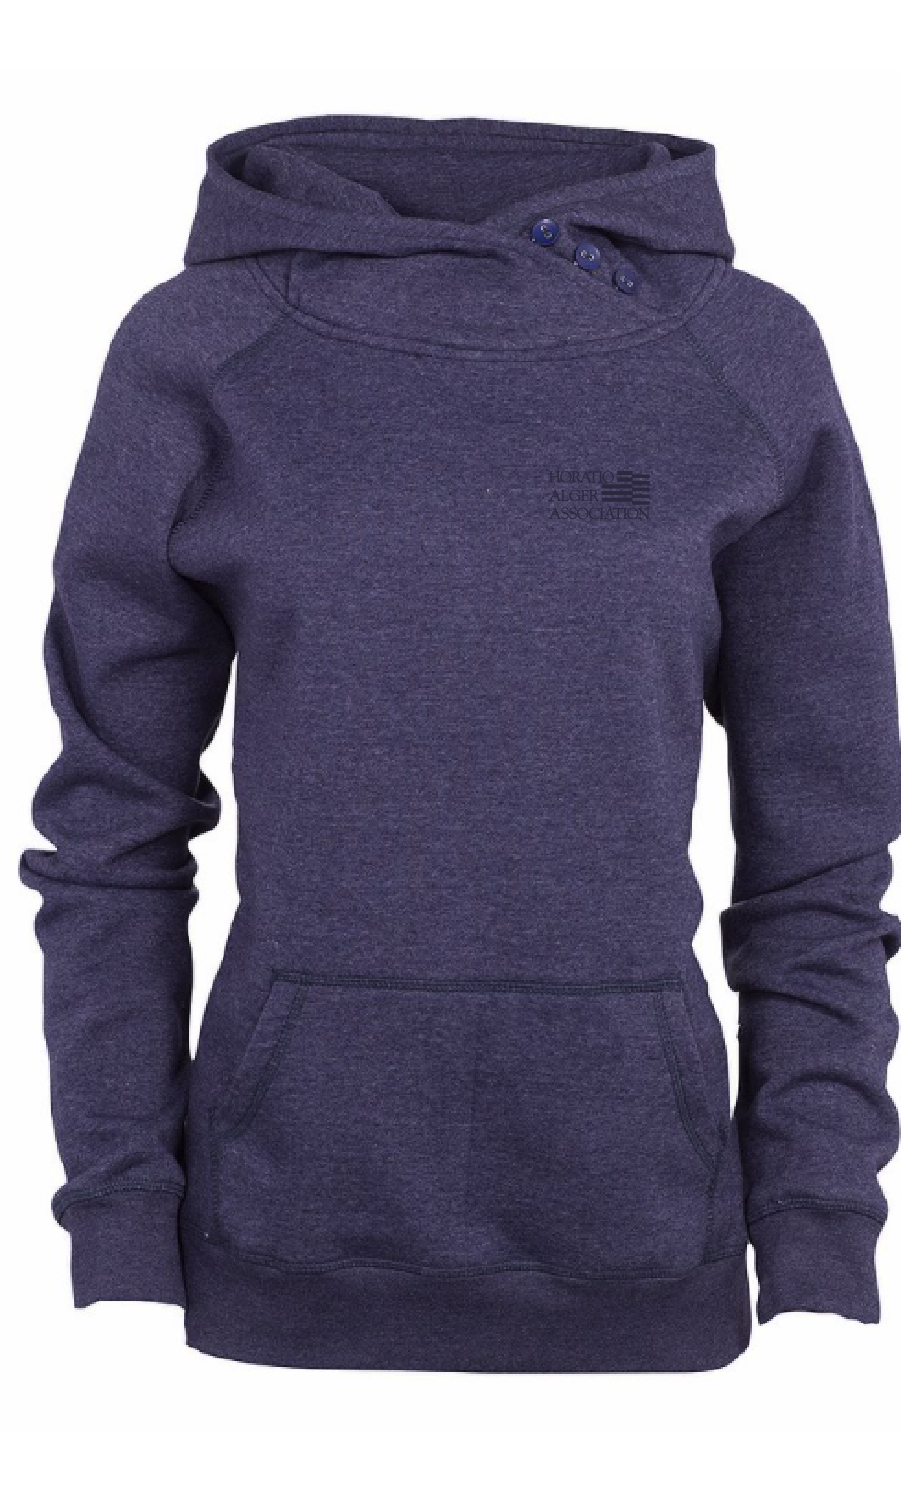 Women's Hooded Sweatshirt – Navy – Horatio Alger Association